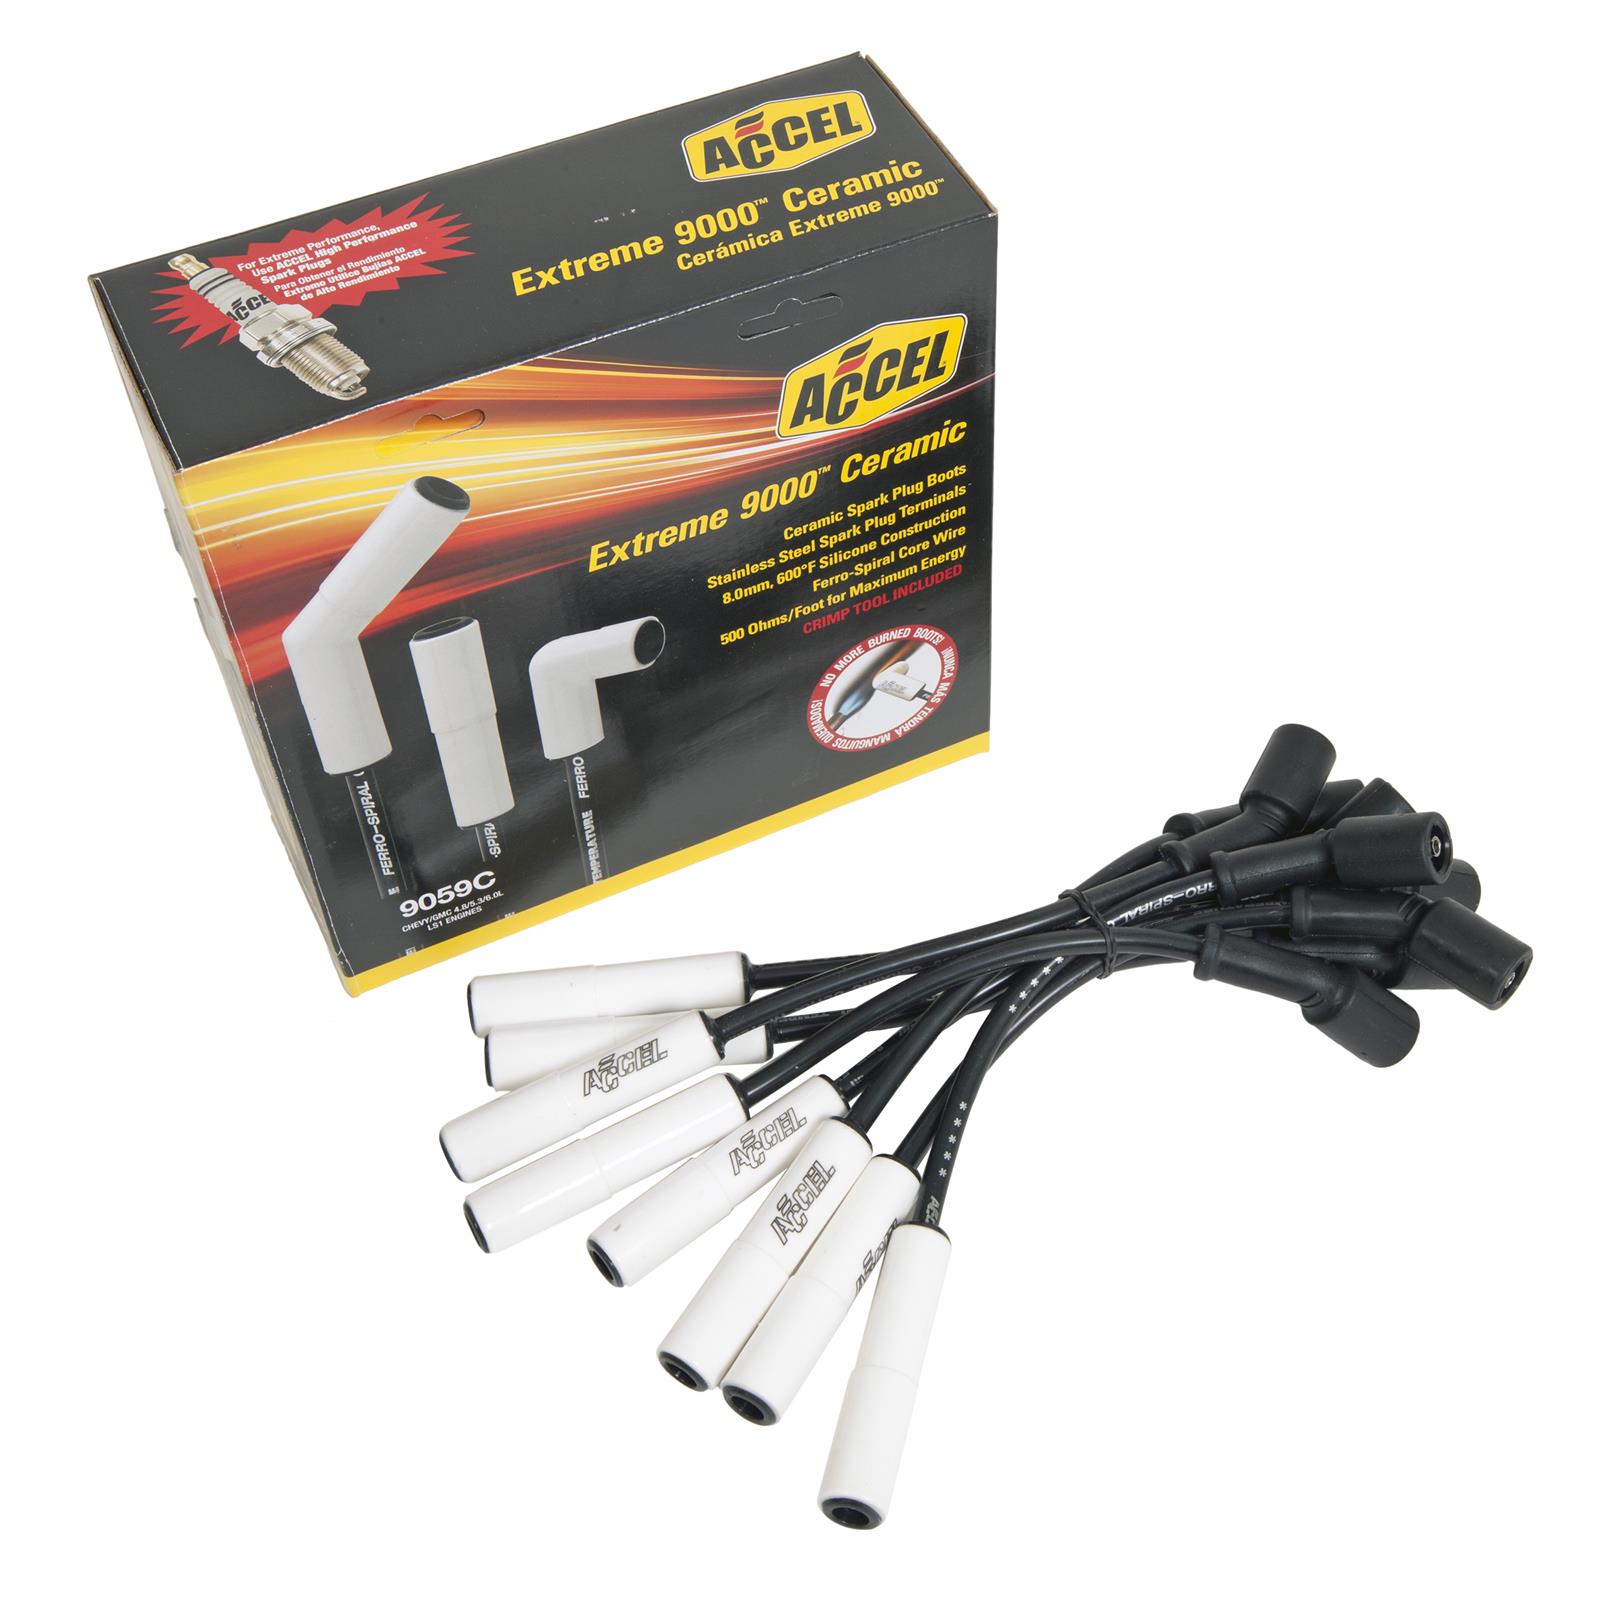  ACCEL 9065C Extreme 9000 Spark Plug Wire Set Ceramic Boot :  Automotive